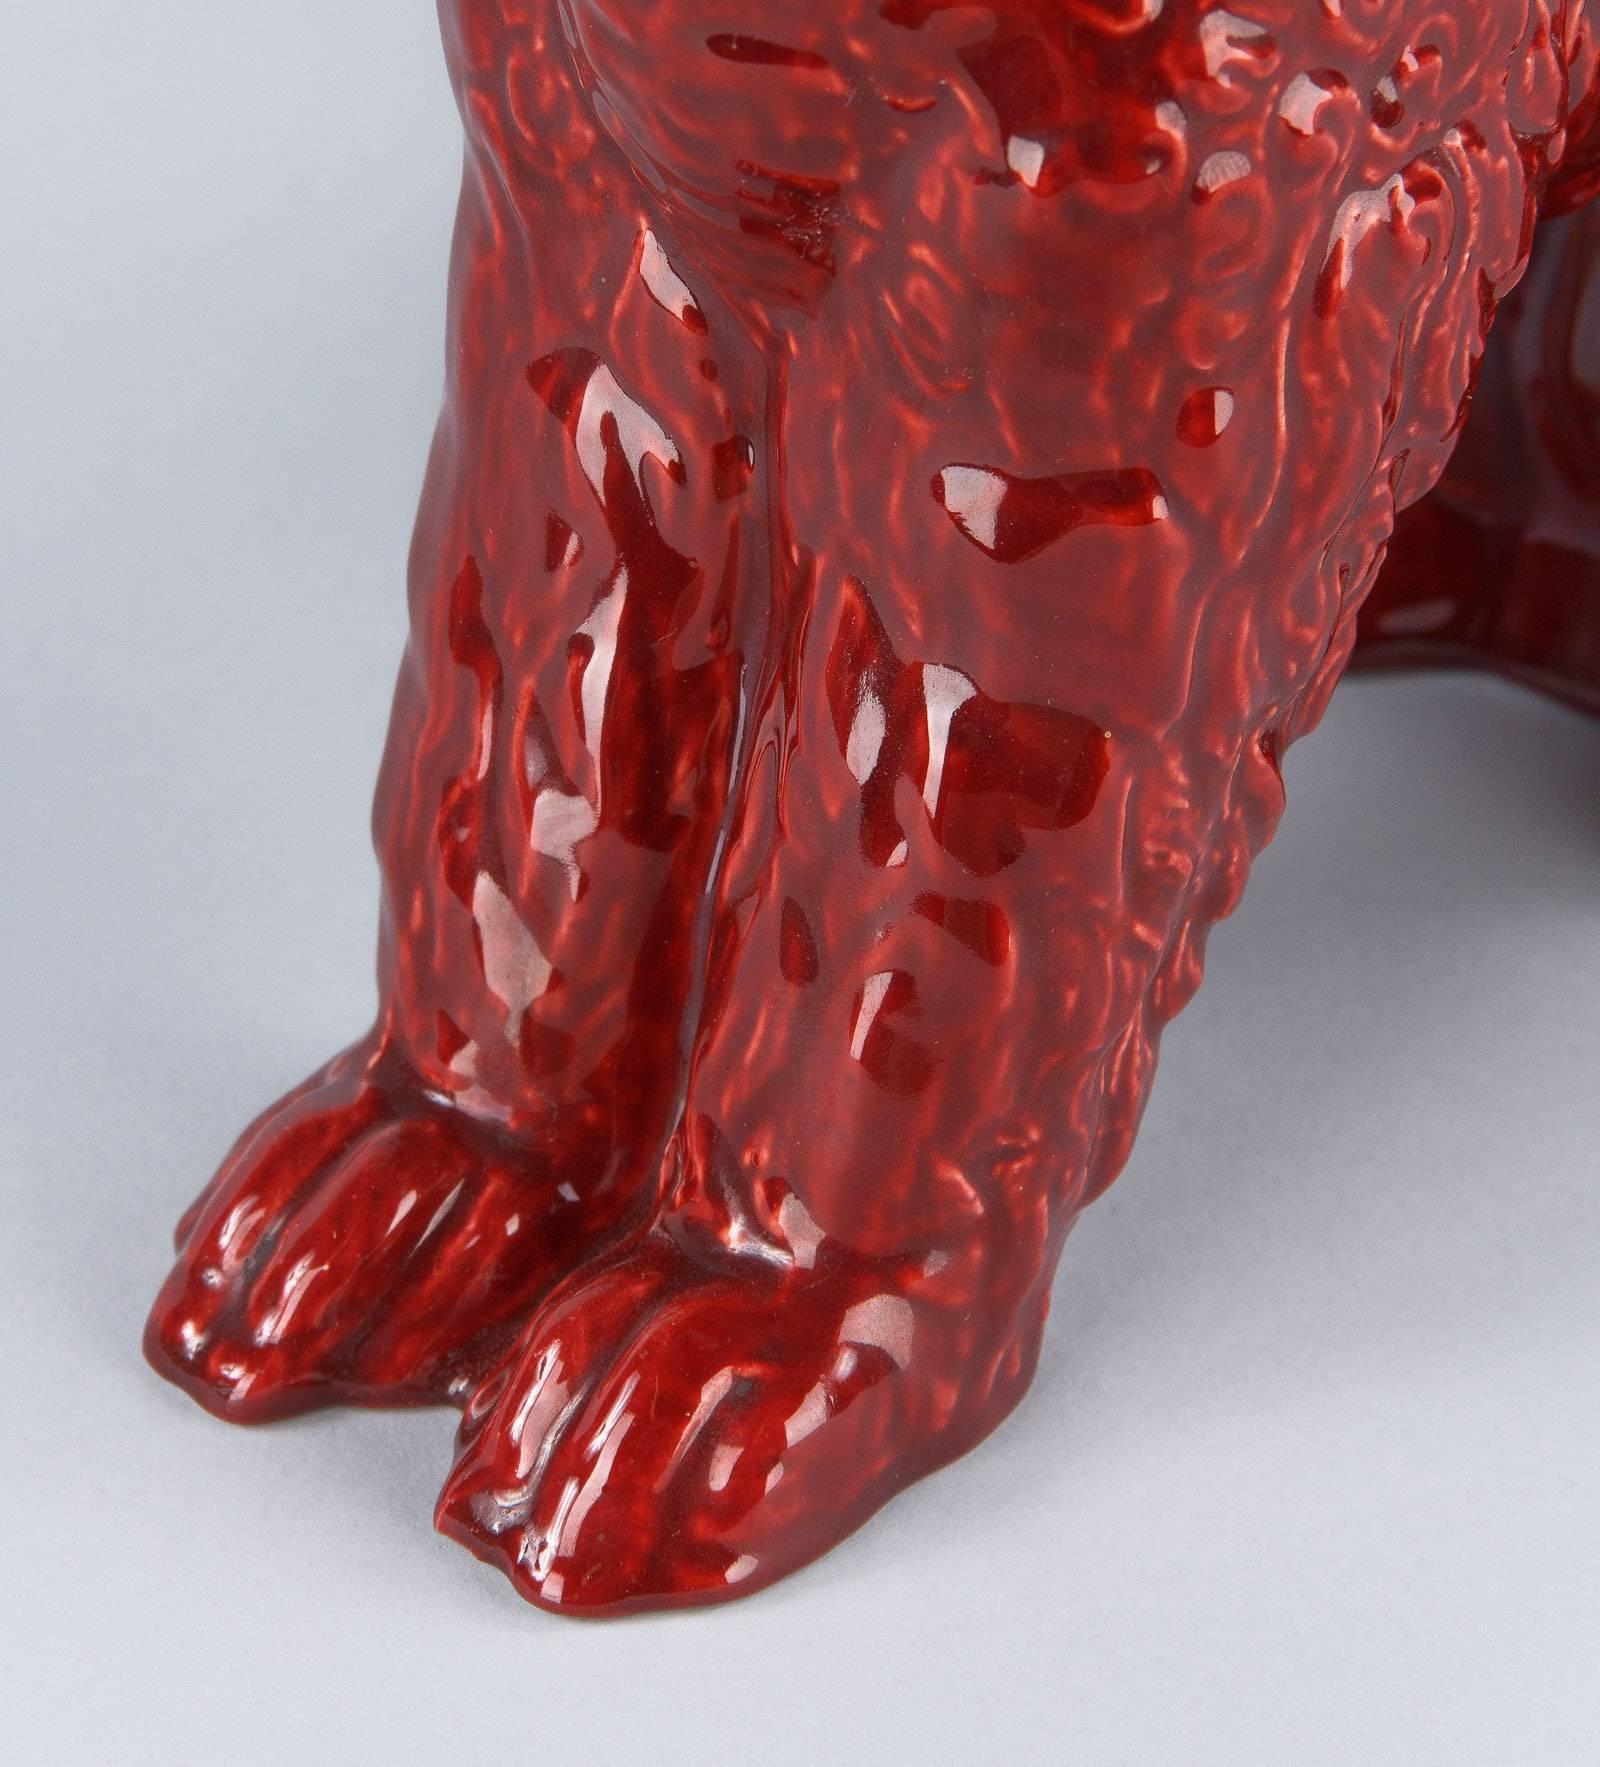 ceramic poodle figurines